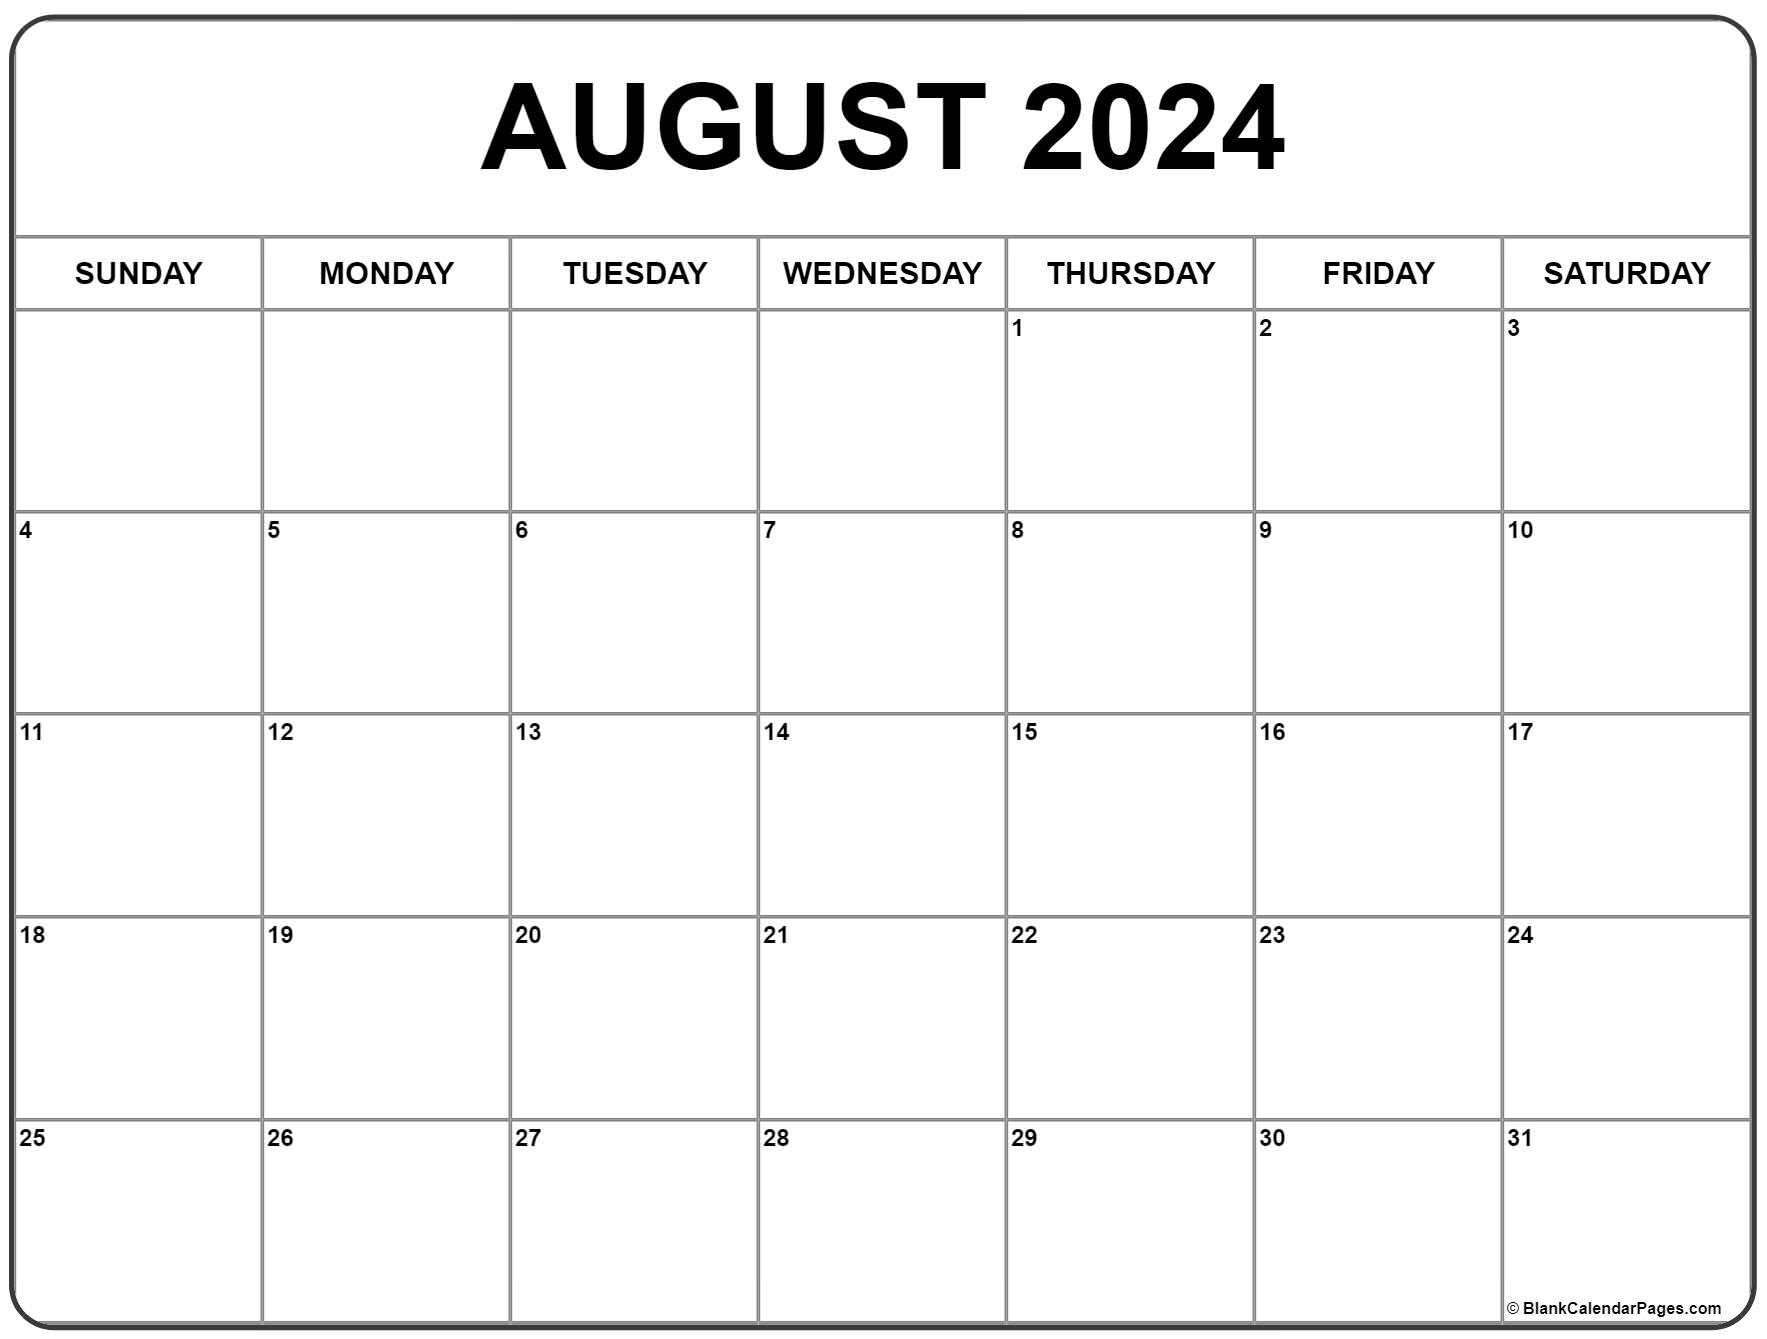 August 2024 Calendar | Free Printable Calendar for August 2024 Printable Calendar